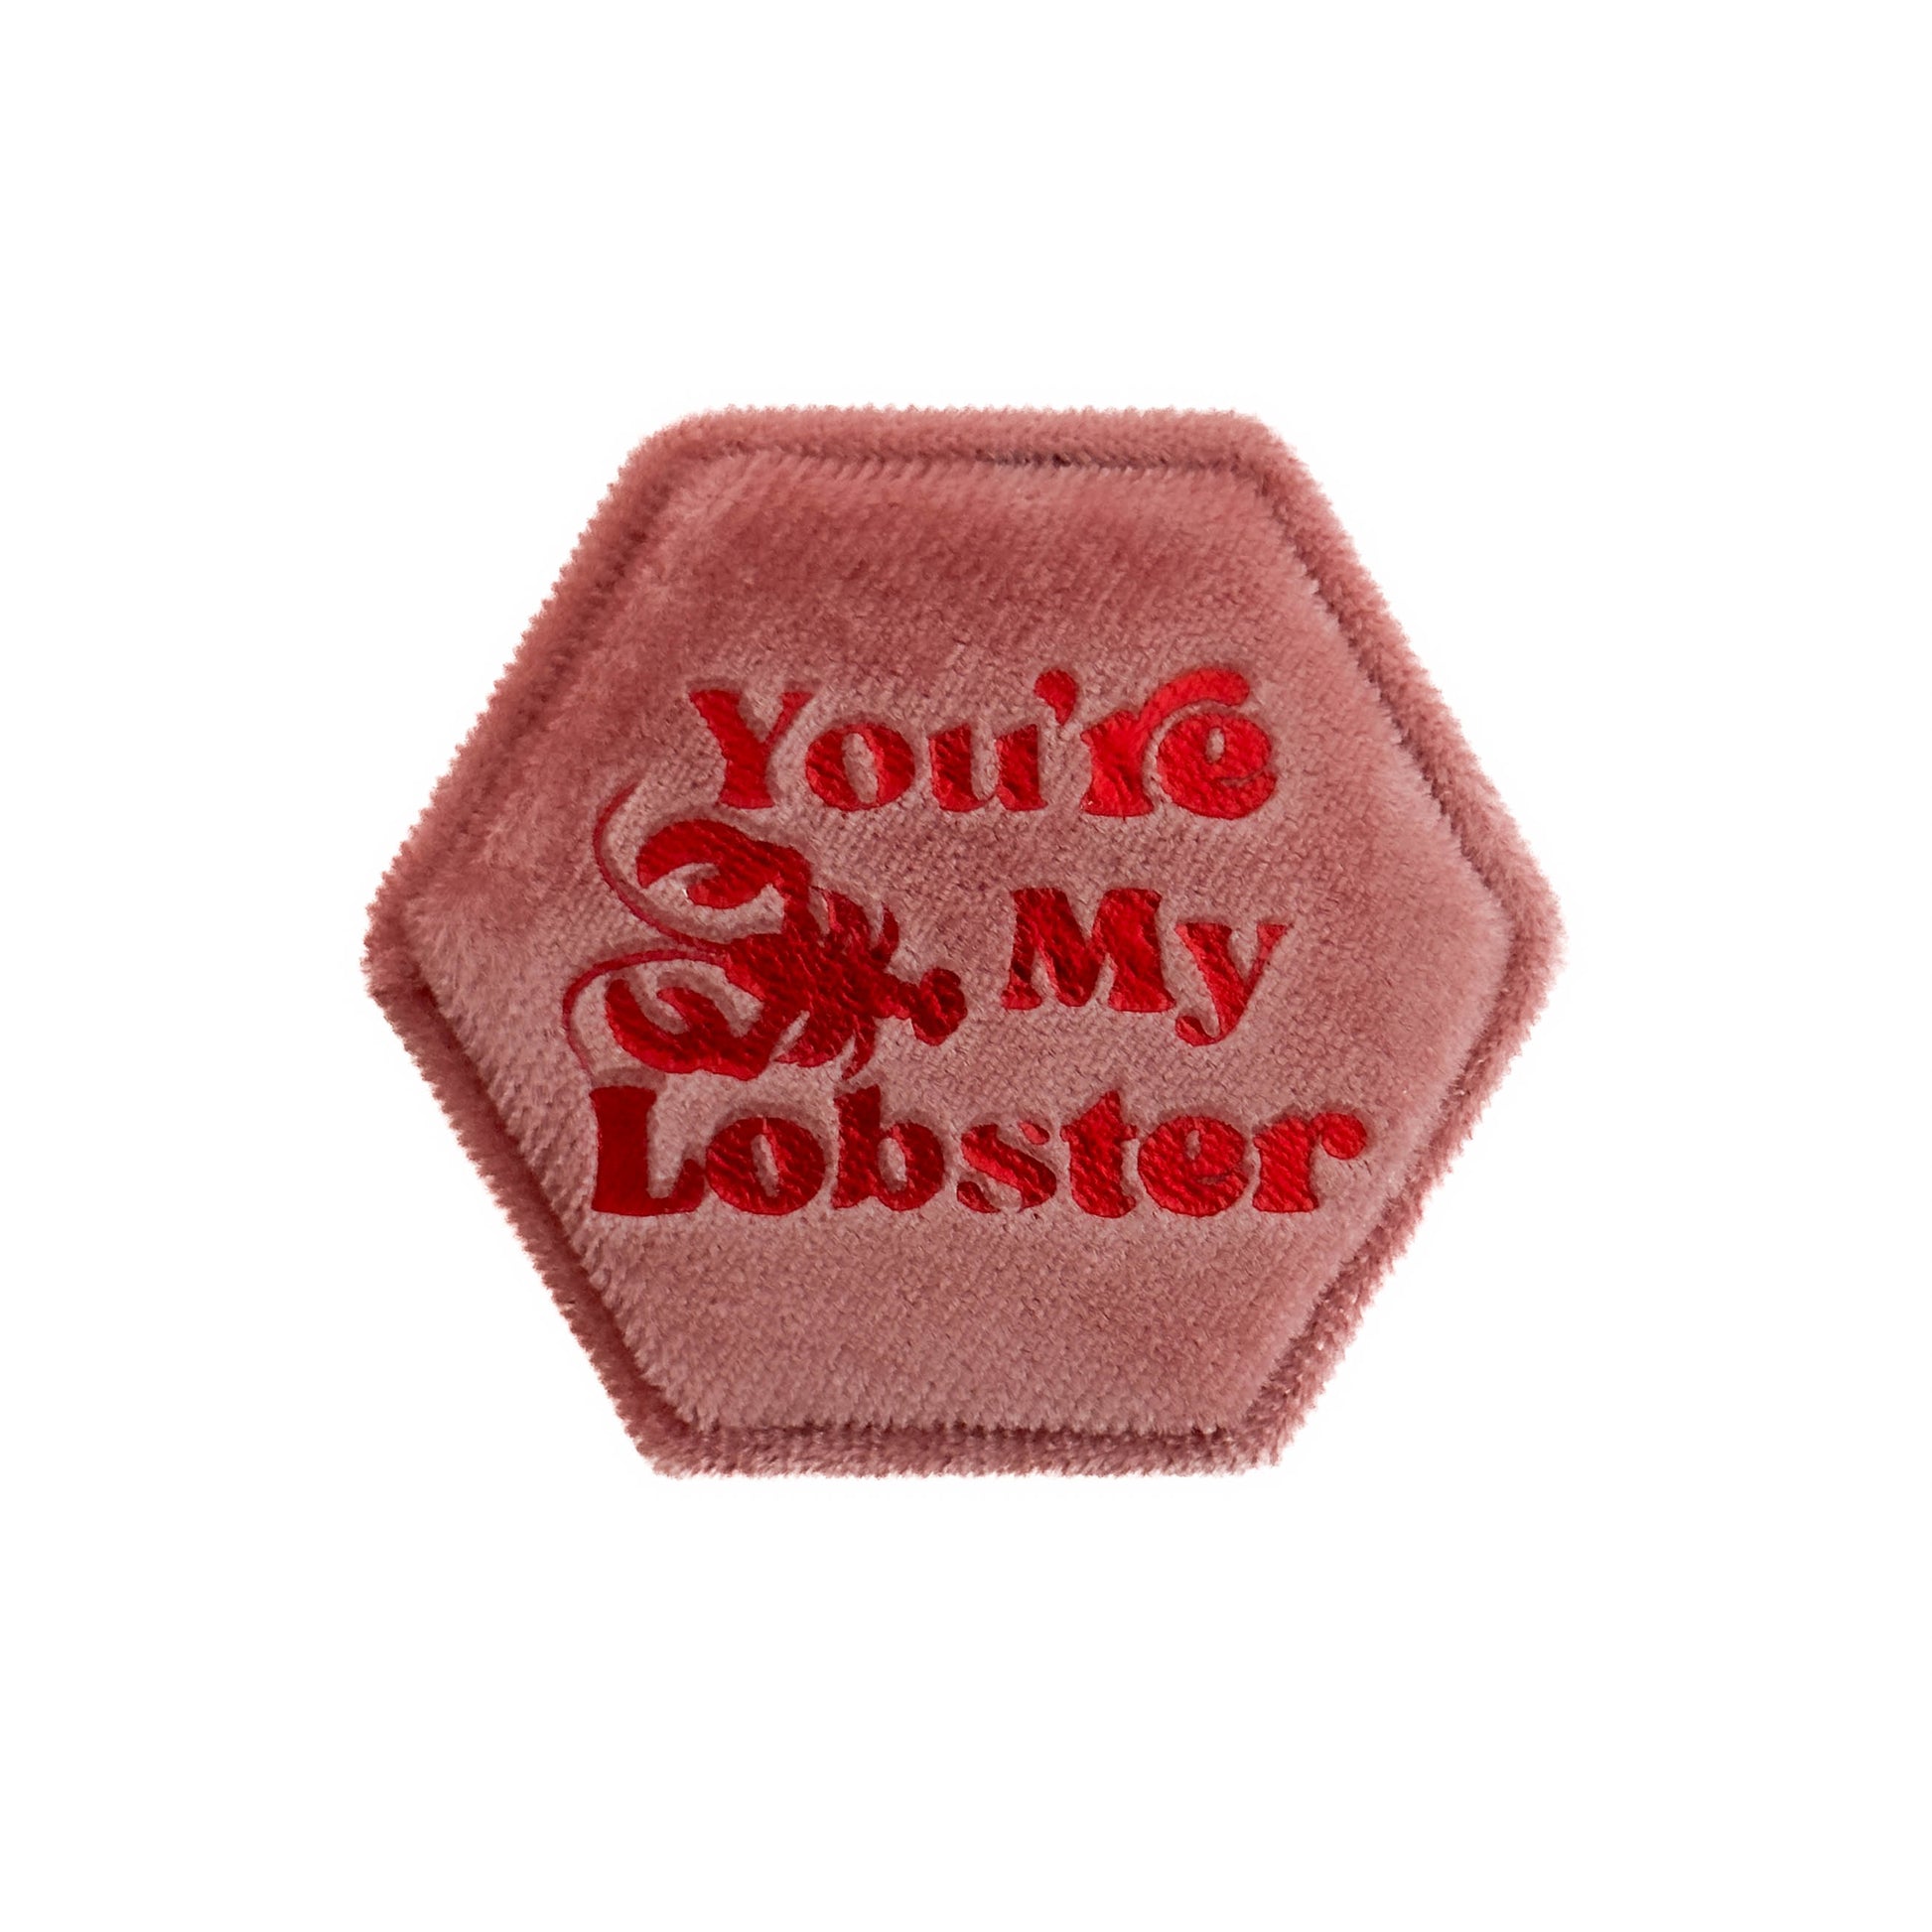 You're My Lobster Pink Wedding Ring Box Mysticum Luna